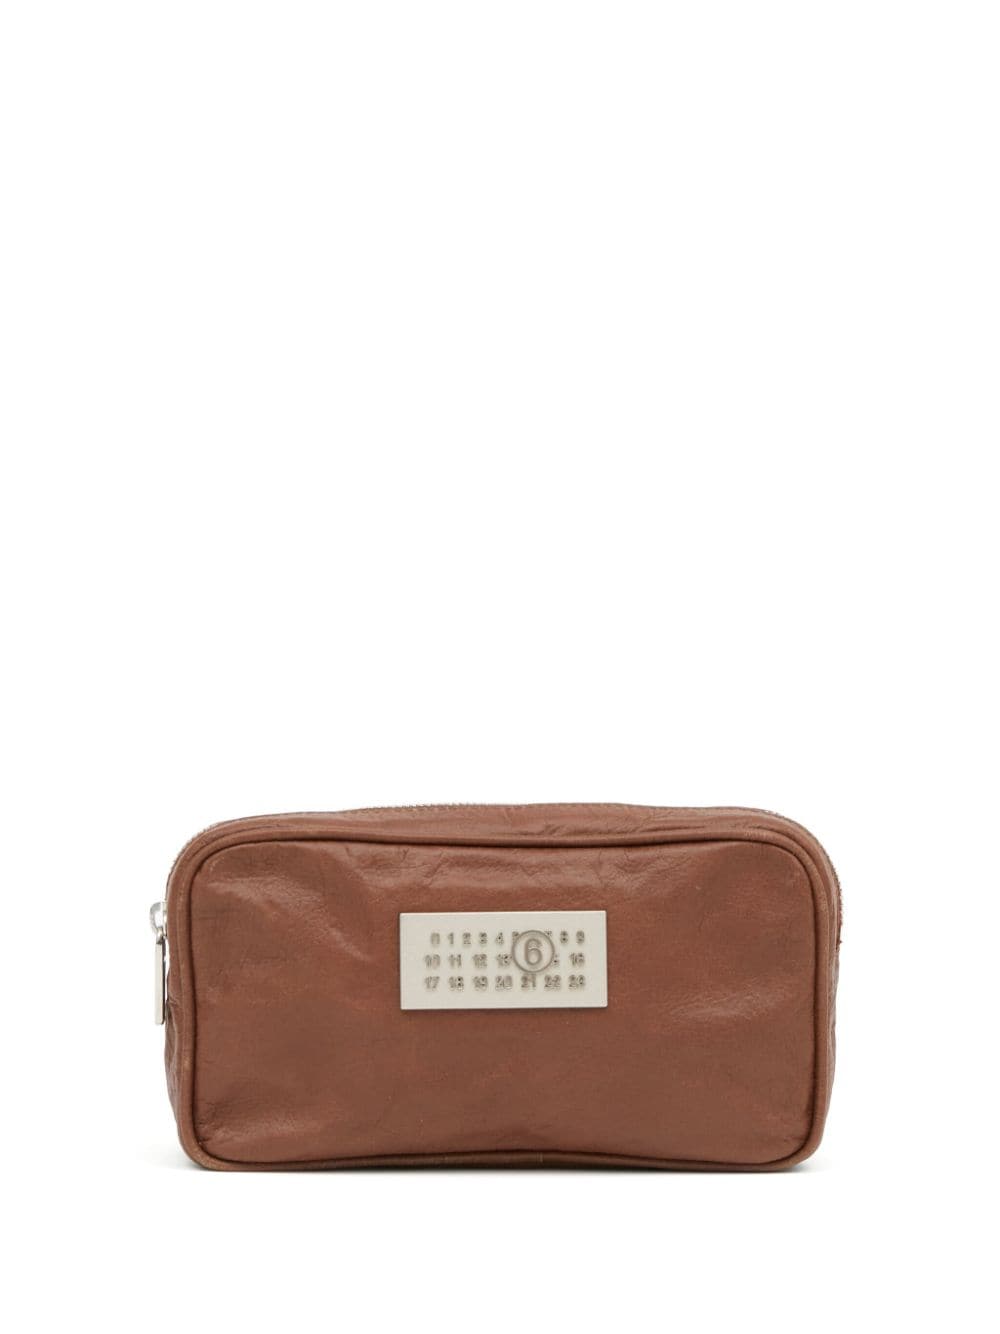 MM6 Maison Margiela Numeric leather bag - Brown